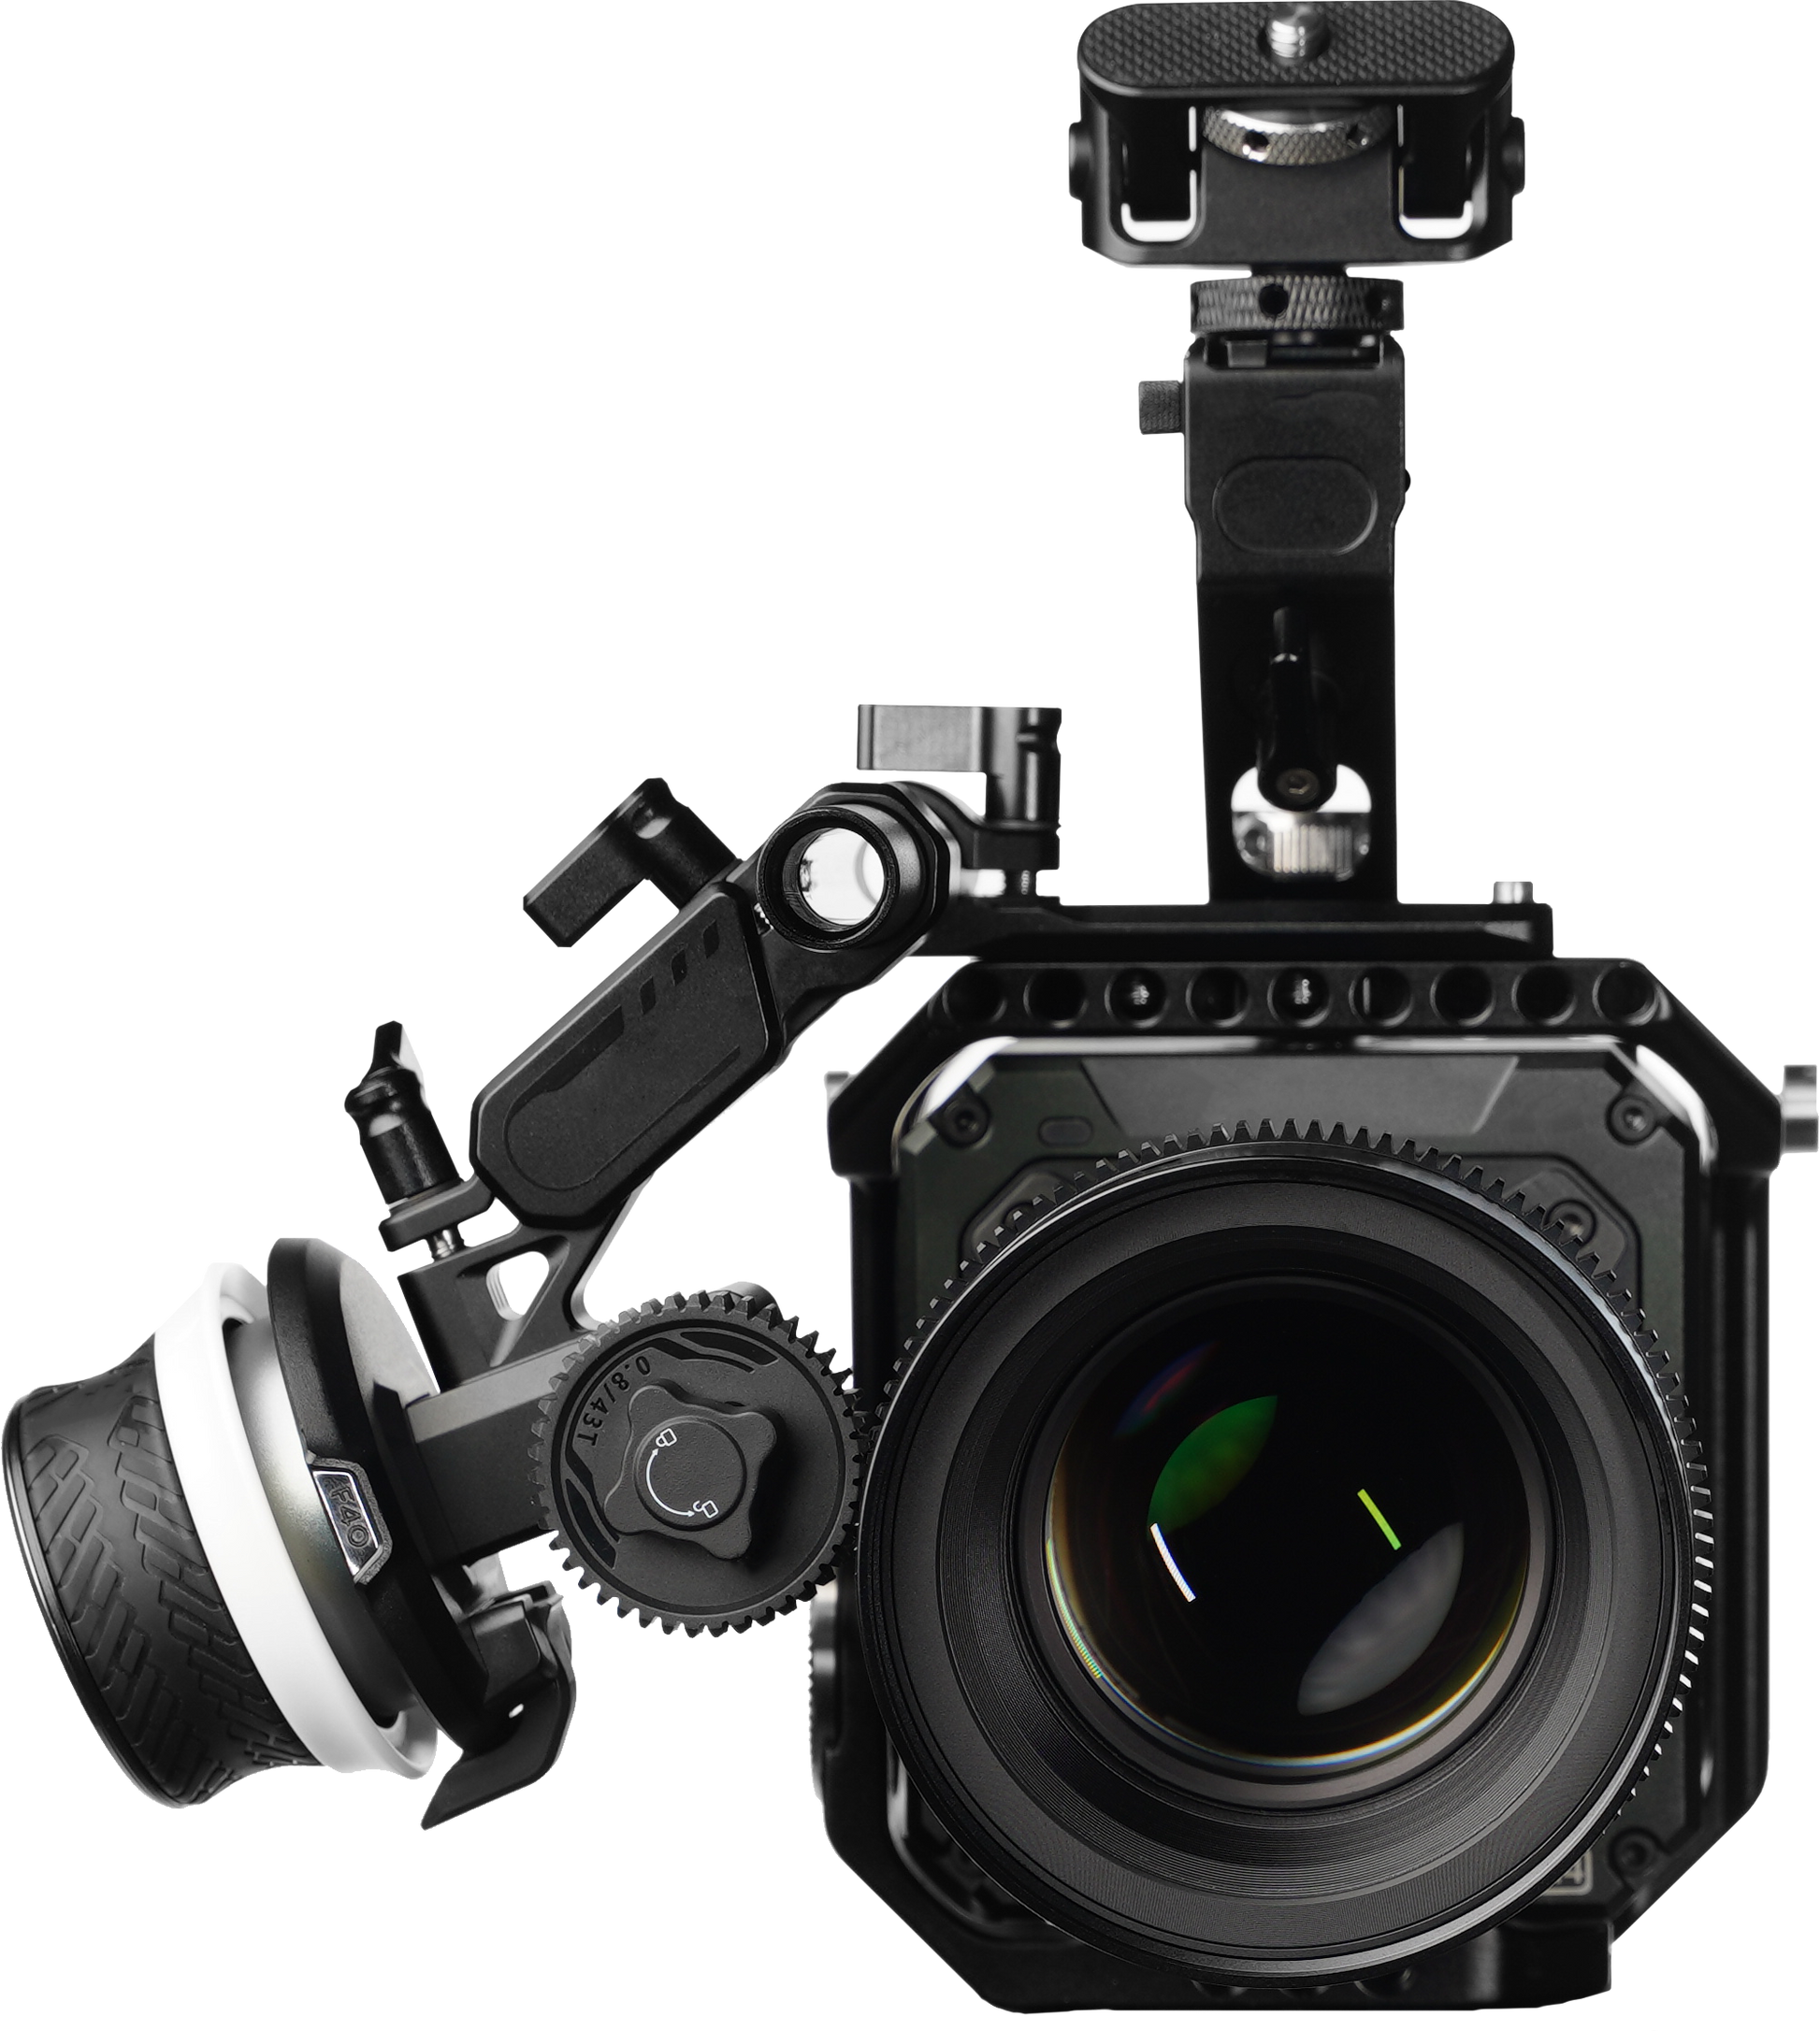 50mm T1.05 APS-C MF Cine Lens for Fujifilm X/Sony E /M43/Canon RF 